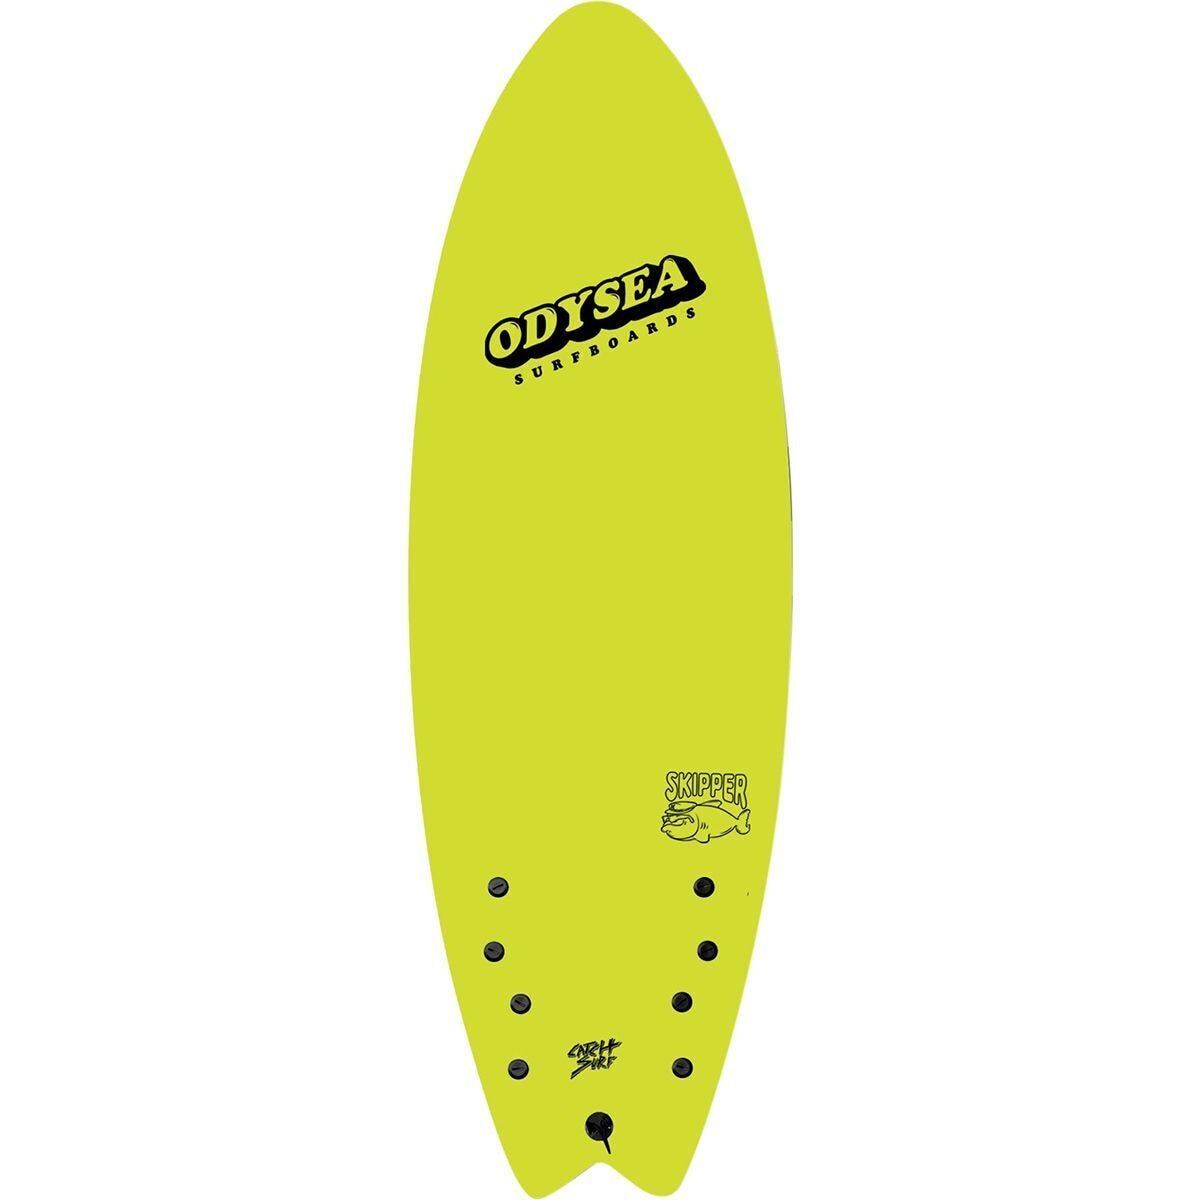 Odysea Skipper Quad Shortboard Catch Surf